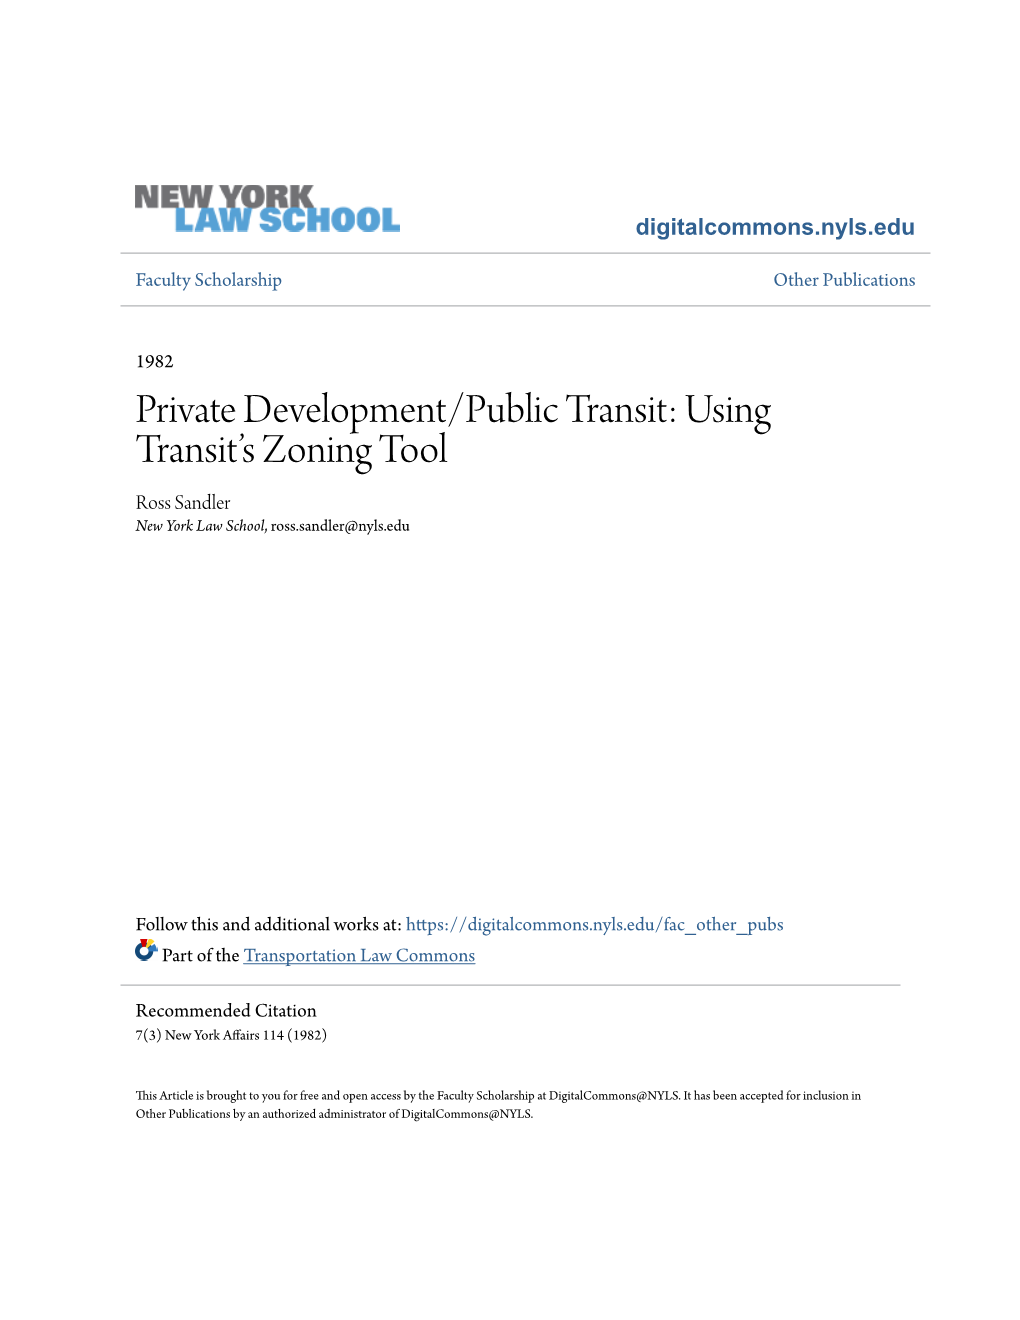 Private Development/Public Transit: Using Transit’S Zoning Tool Ross Sandler New York Law School, Ross.Sandler@Nyls.Edu